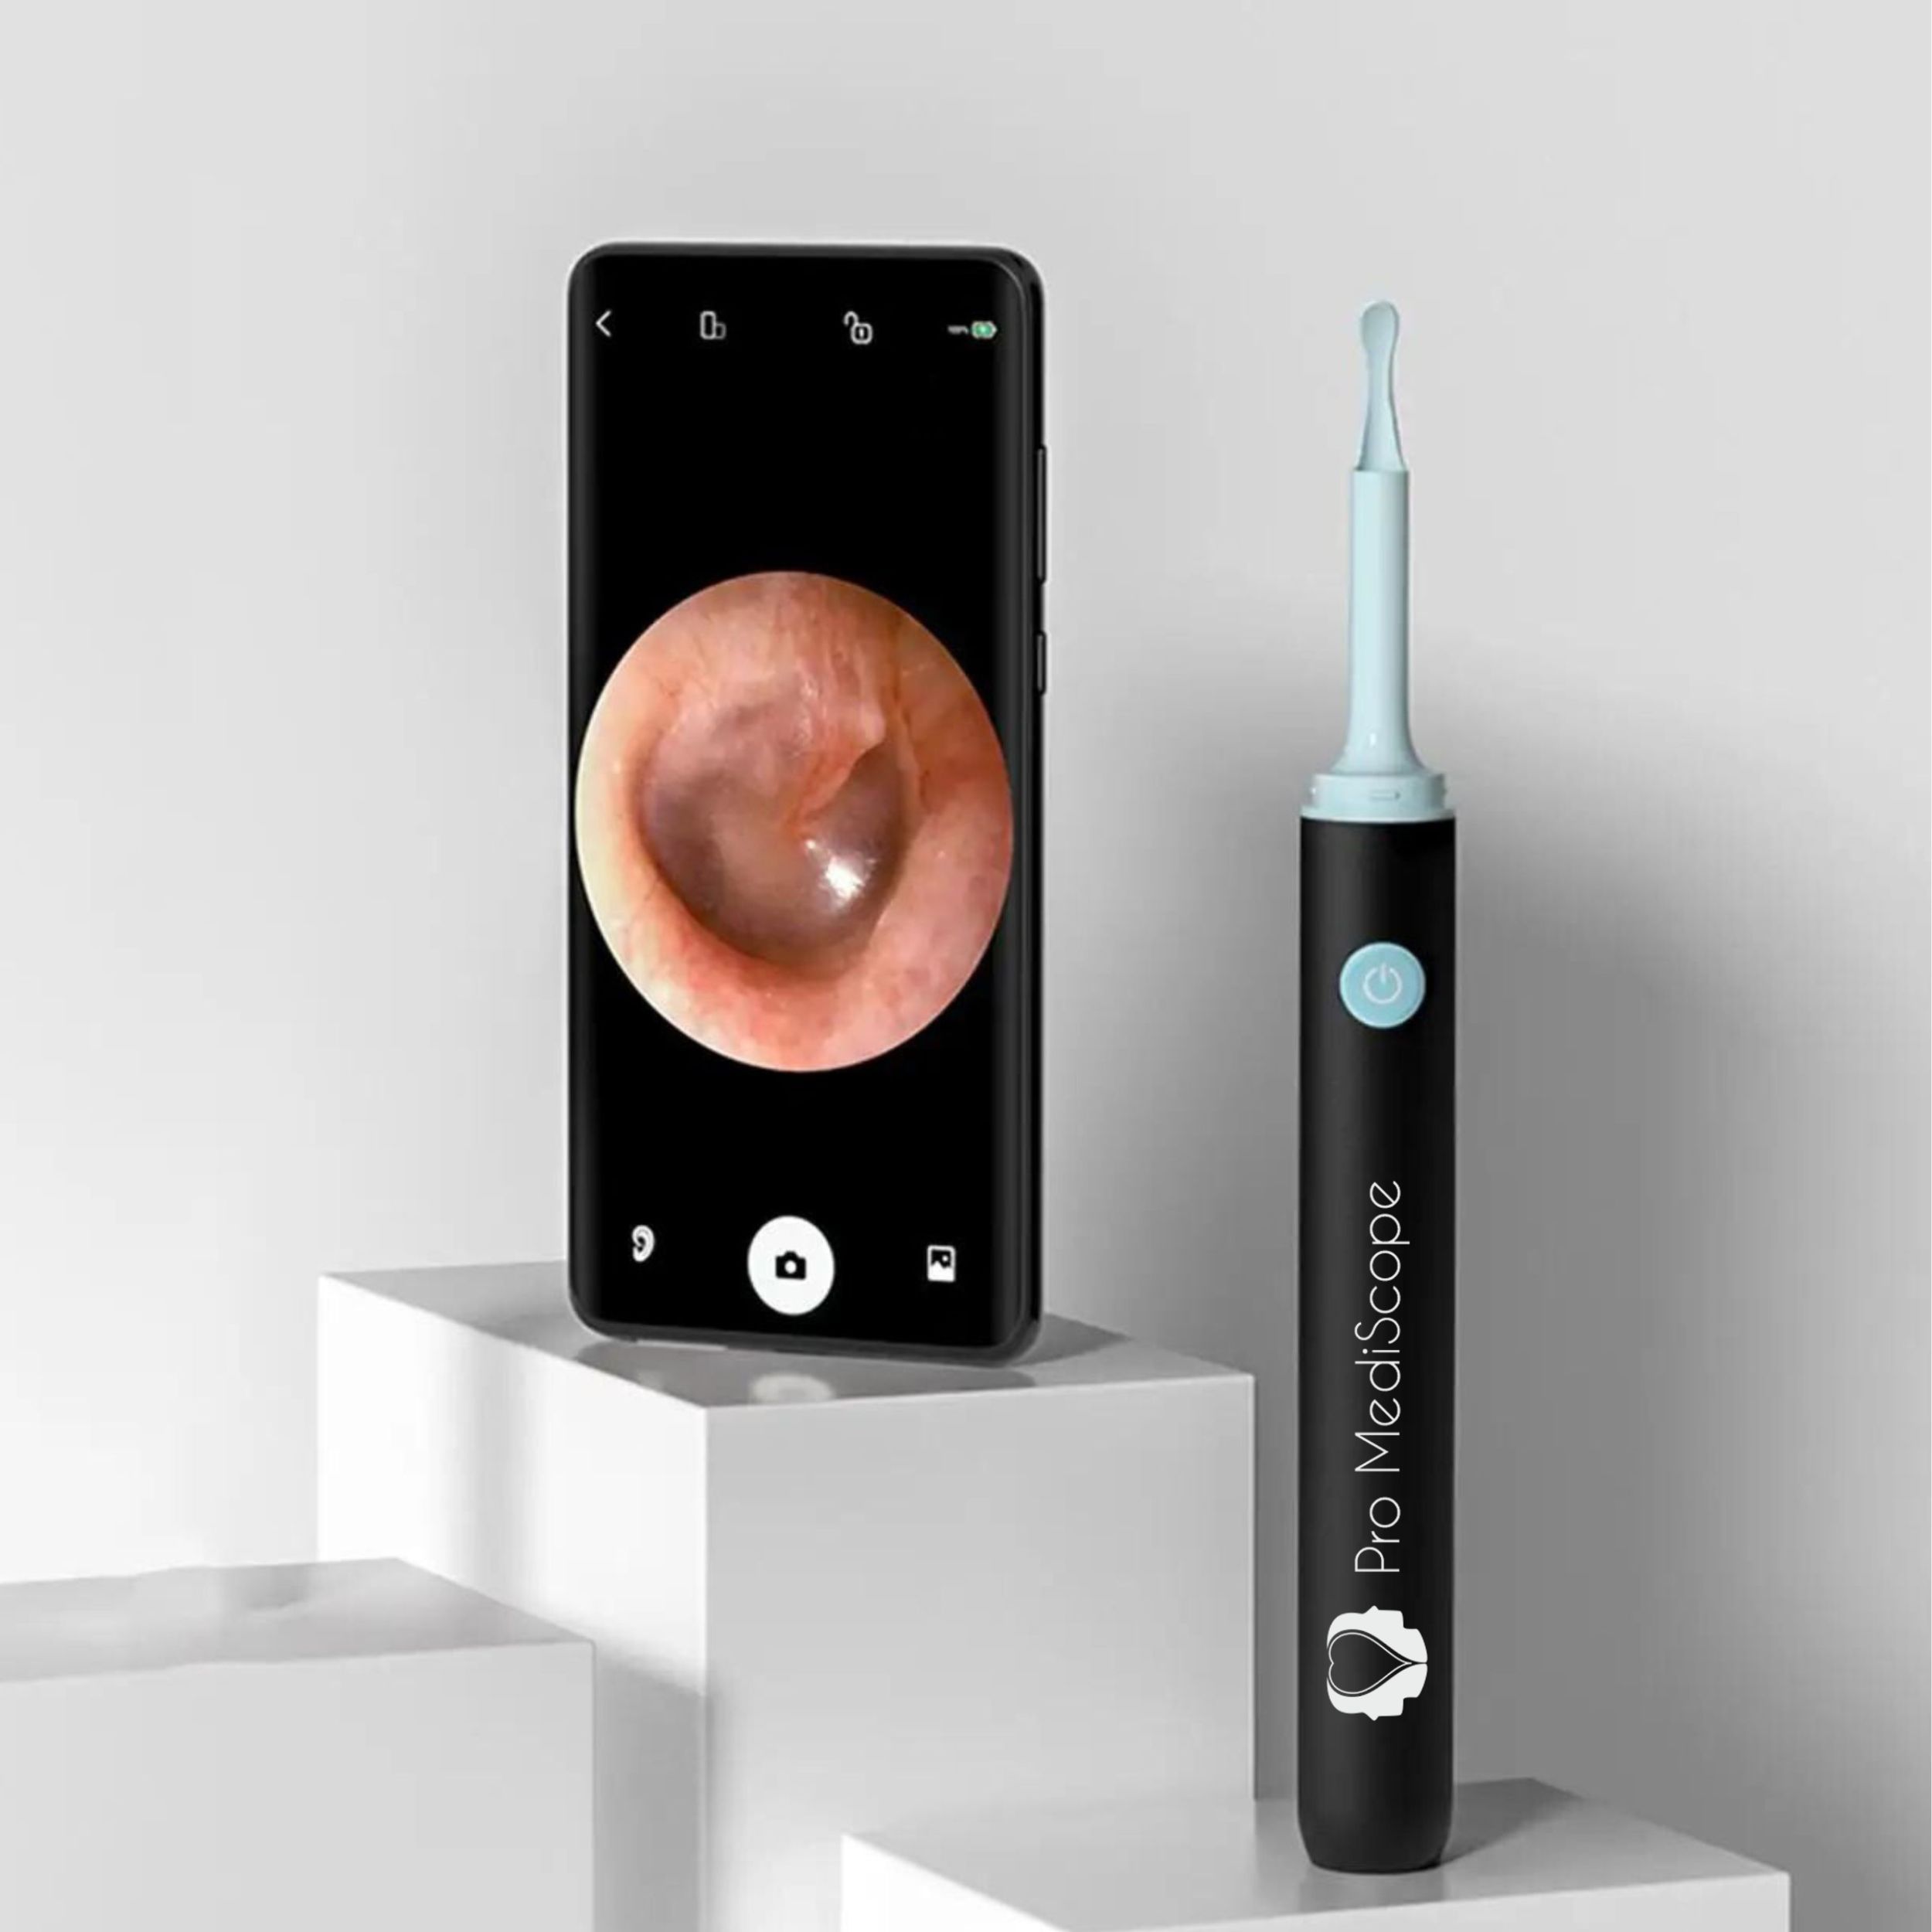 Otoskop smart pro mediscope kamera du uszu usuwania woskowiny WIFI HD